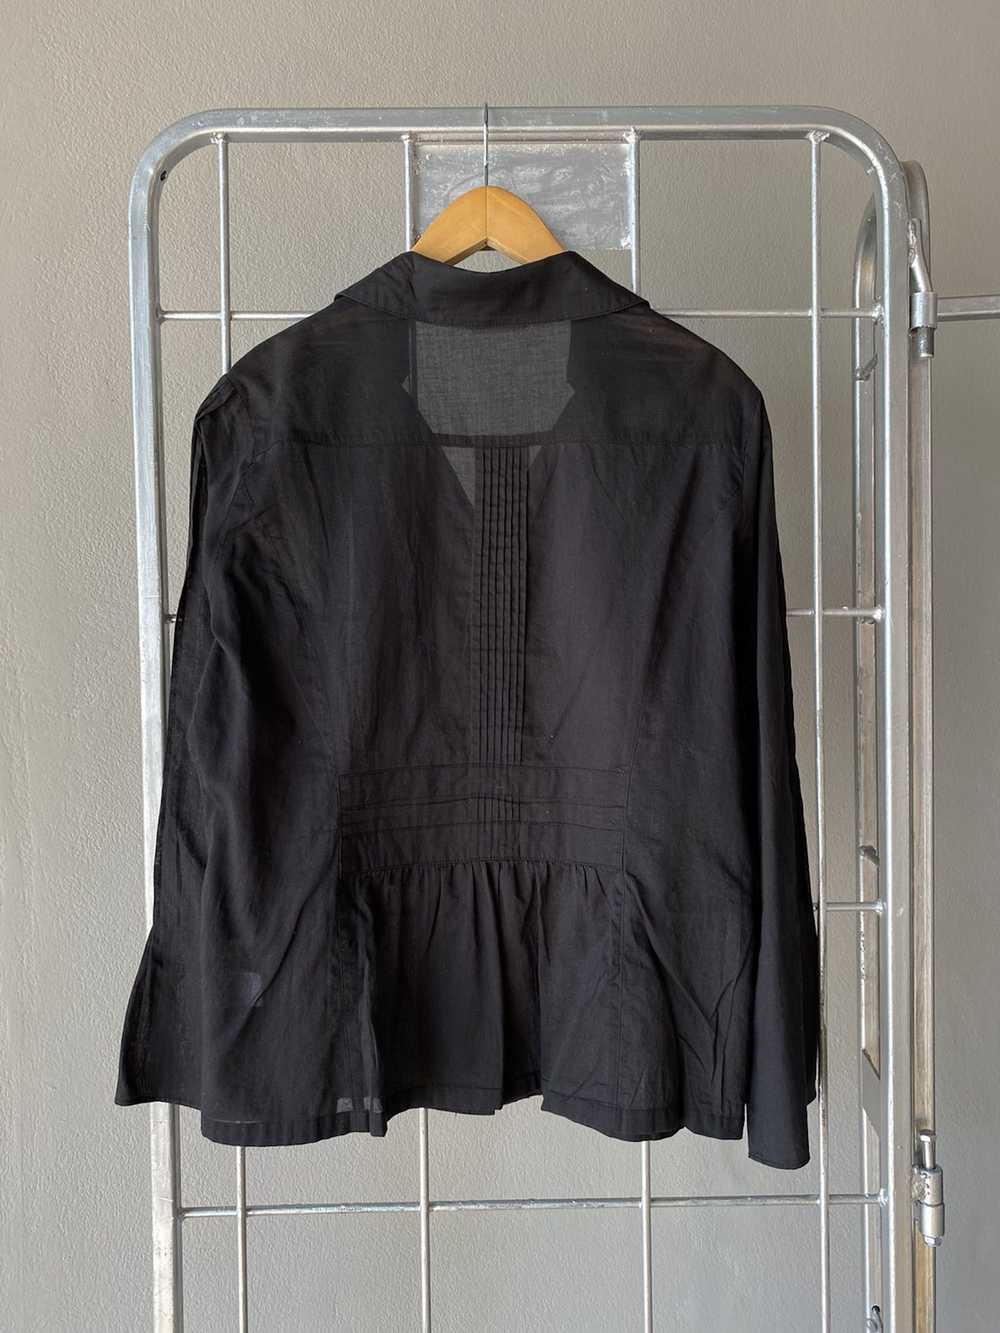 Kansai Yamamoto Kansai Yamamoto Bis black blouse - image 7